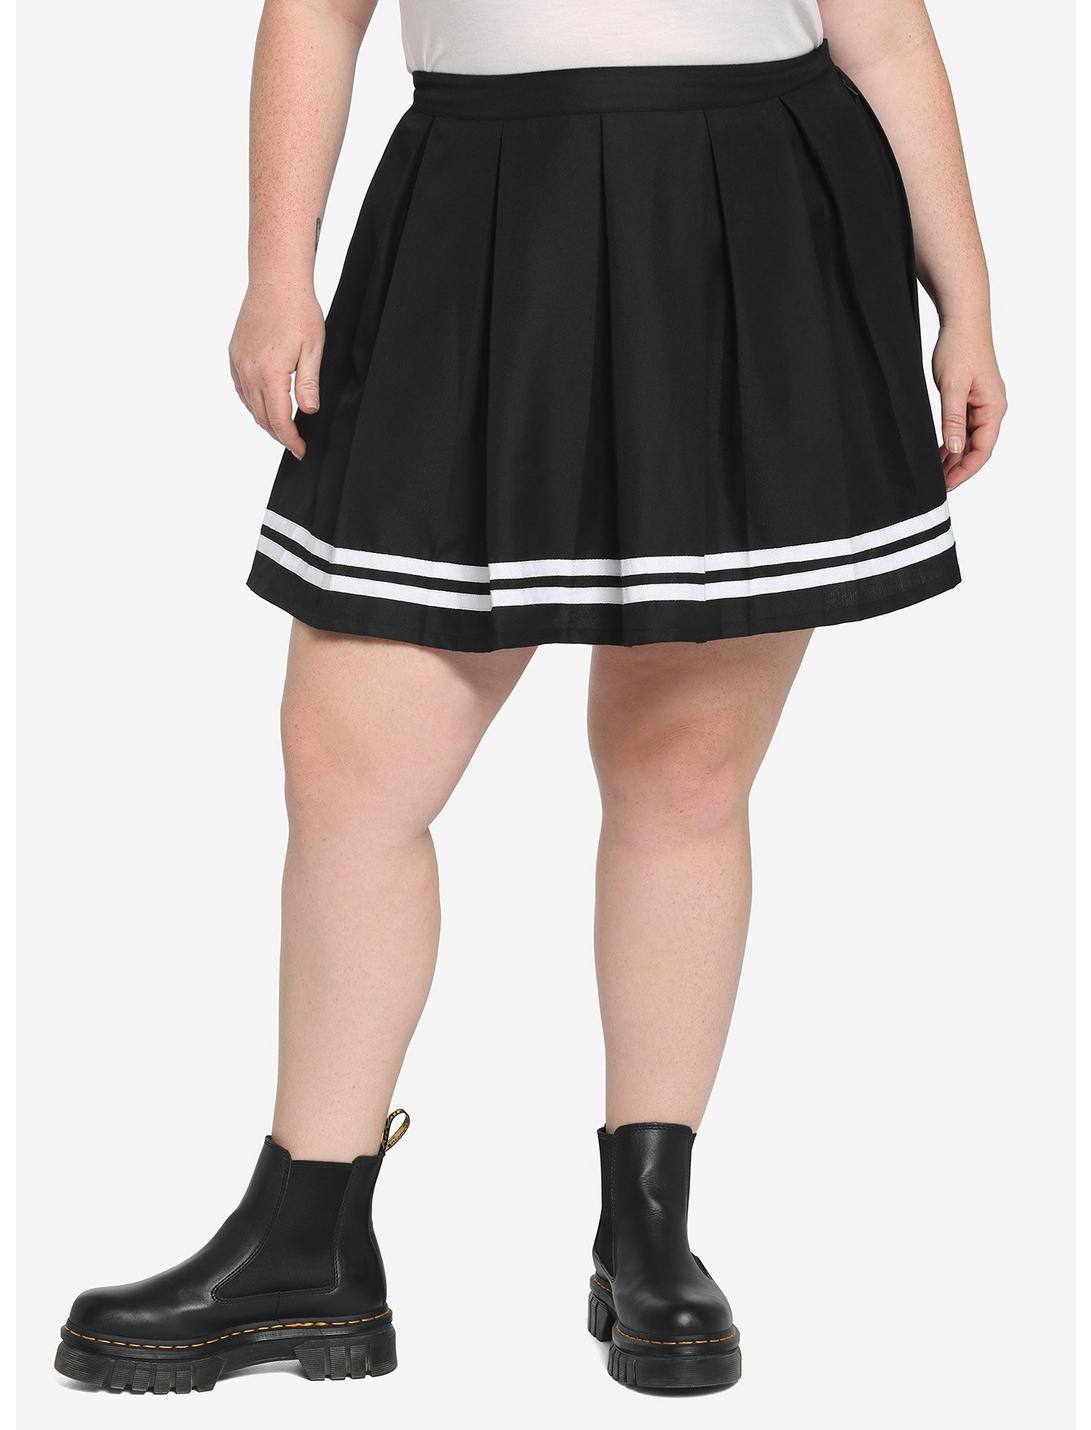 Black Pleated Cheer Skirt Plus Size, BLACK, hi-res